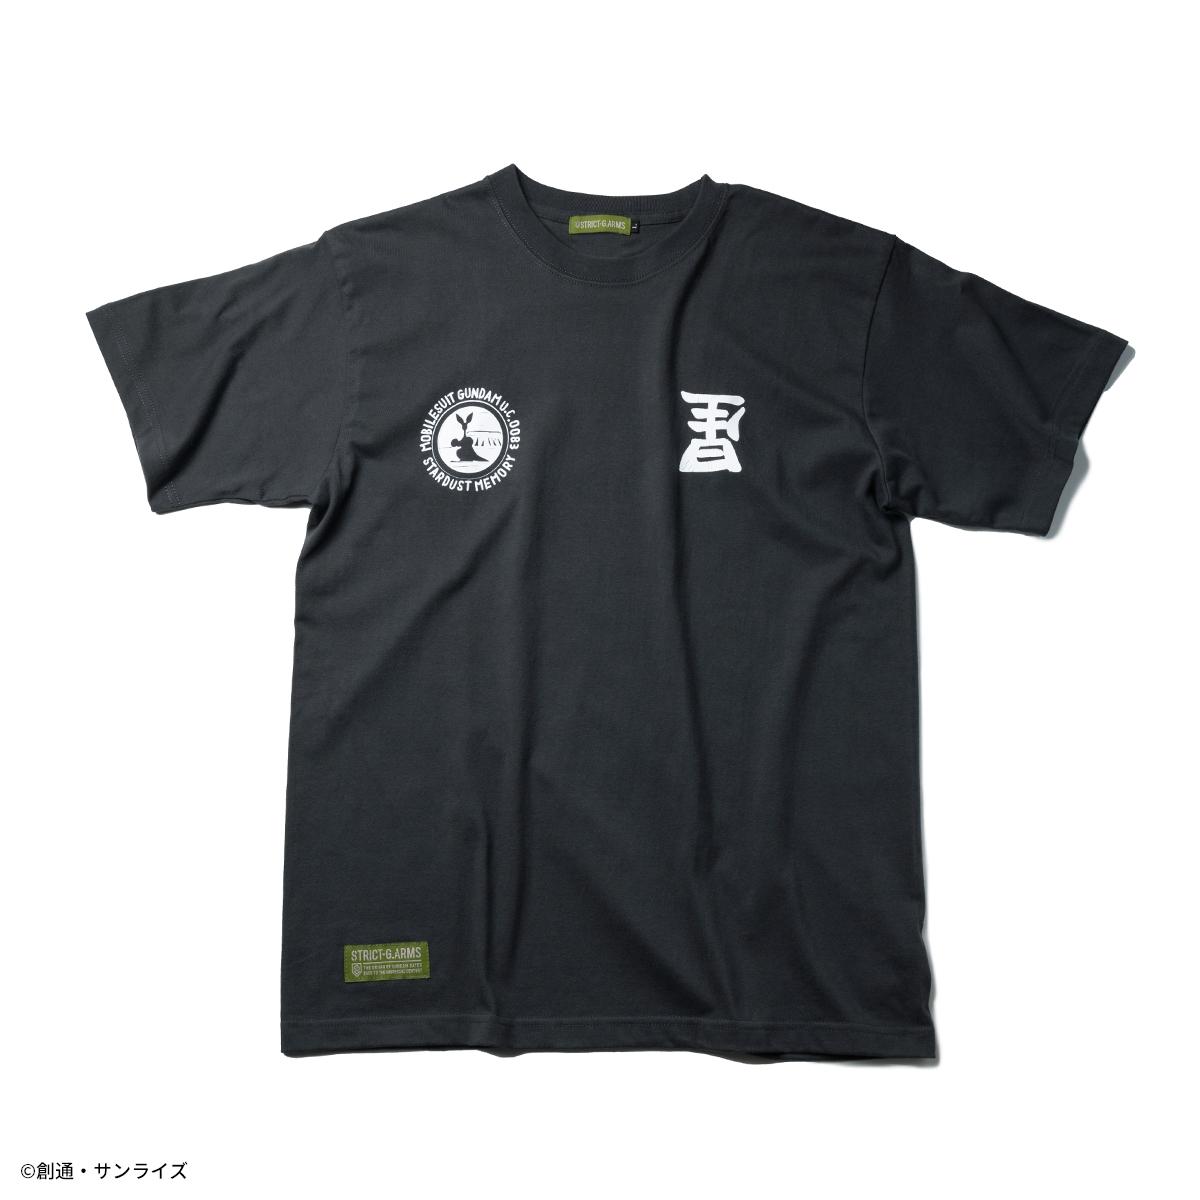 STRICT-G.ARMS『機動戦士ガンダム0083 STARDUST MEMORY』半袖Tシャツ 刺繍風E.F.S.F